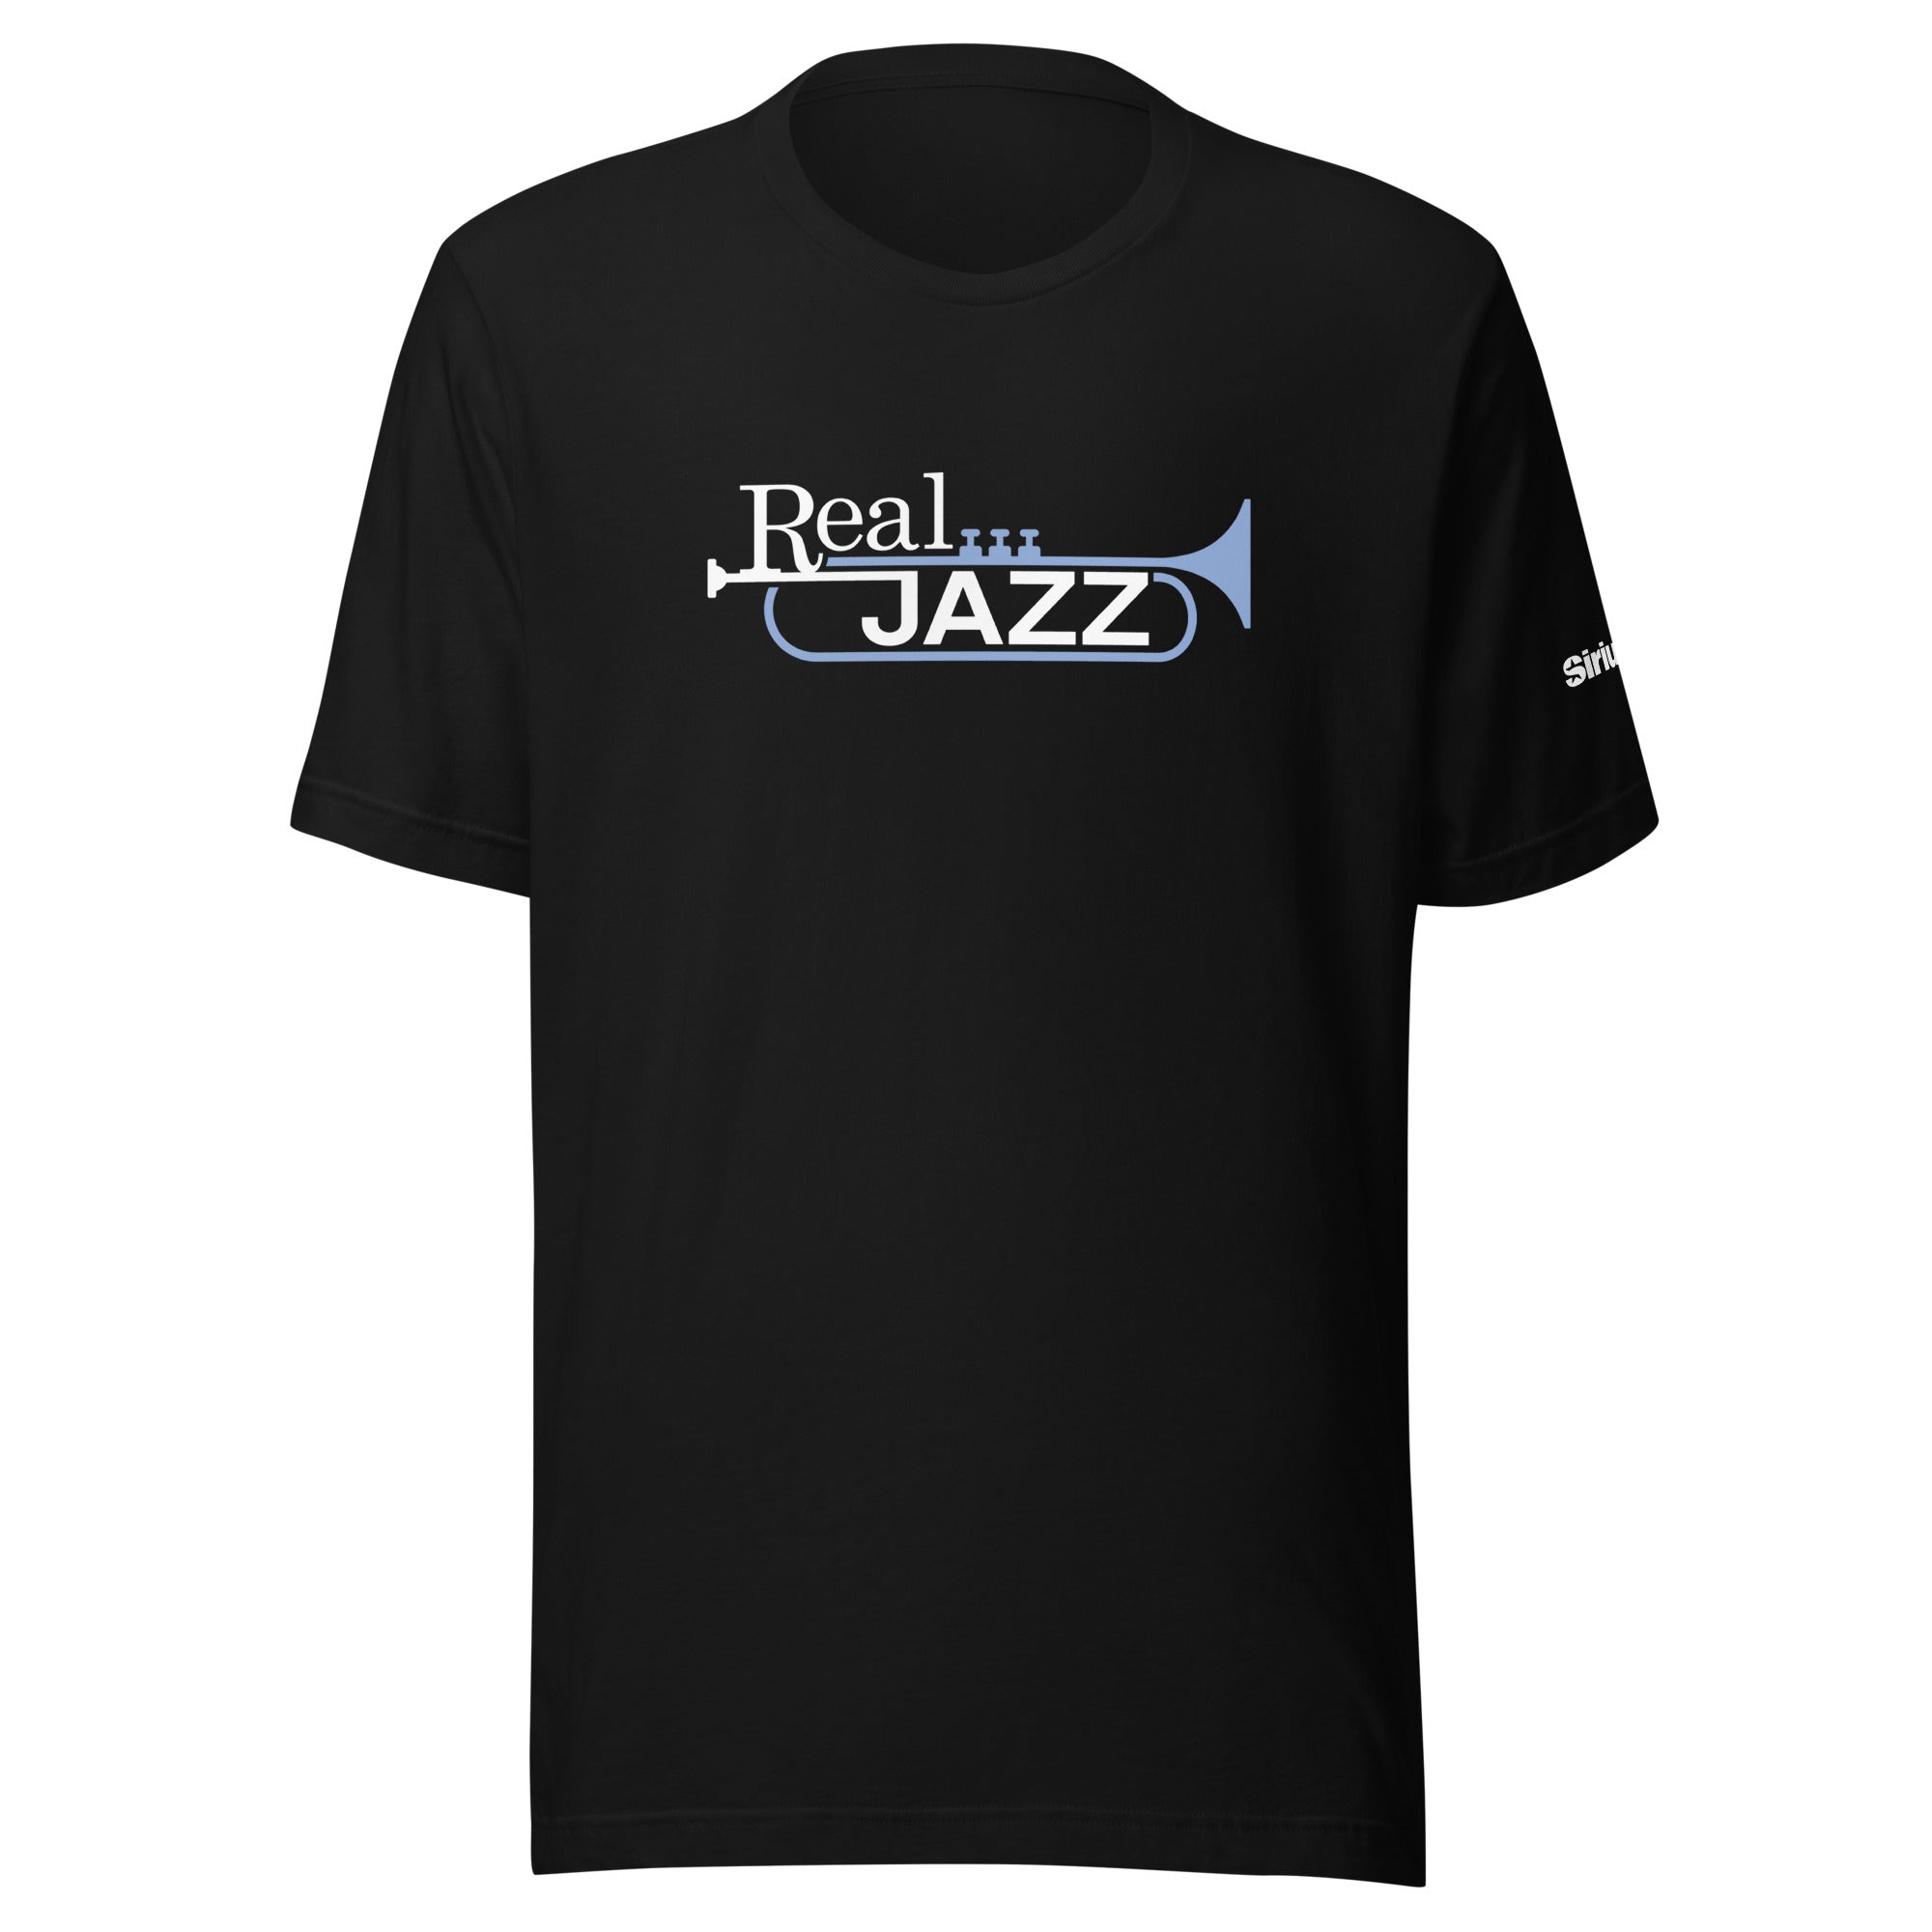 Real Jazz: T-shirt (Black)